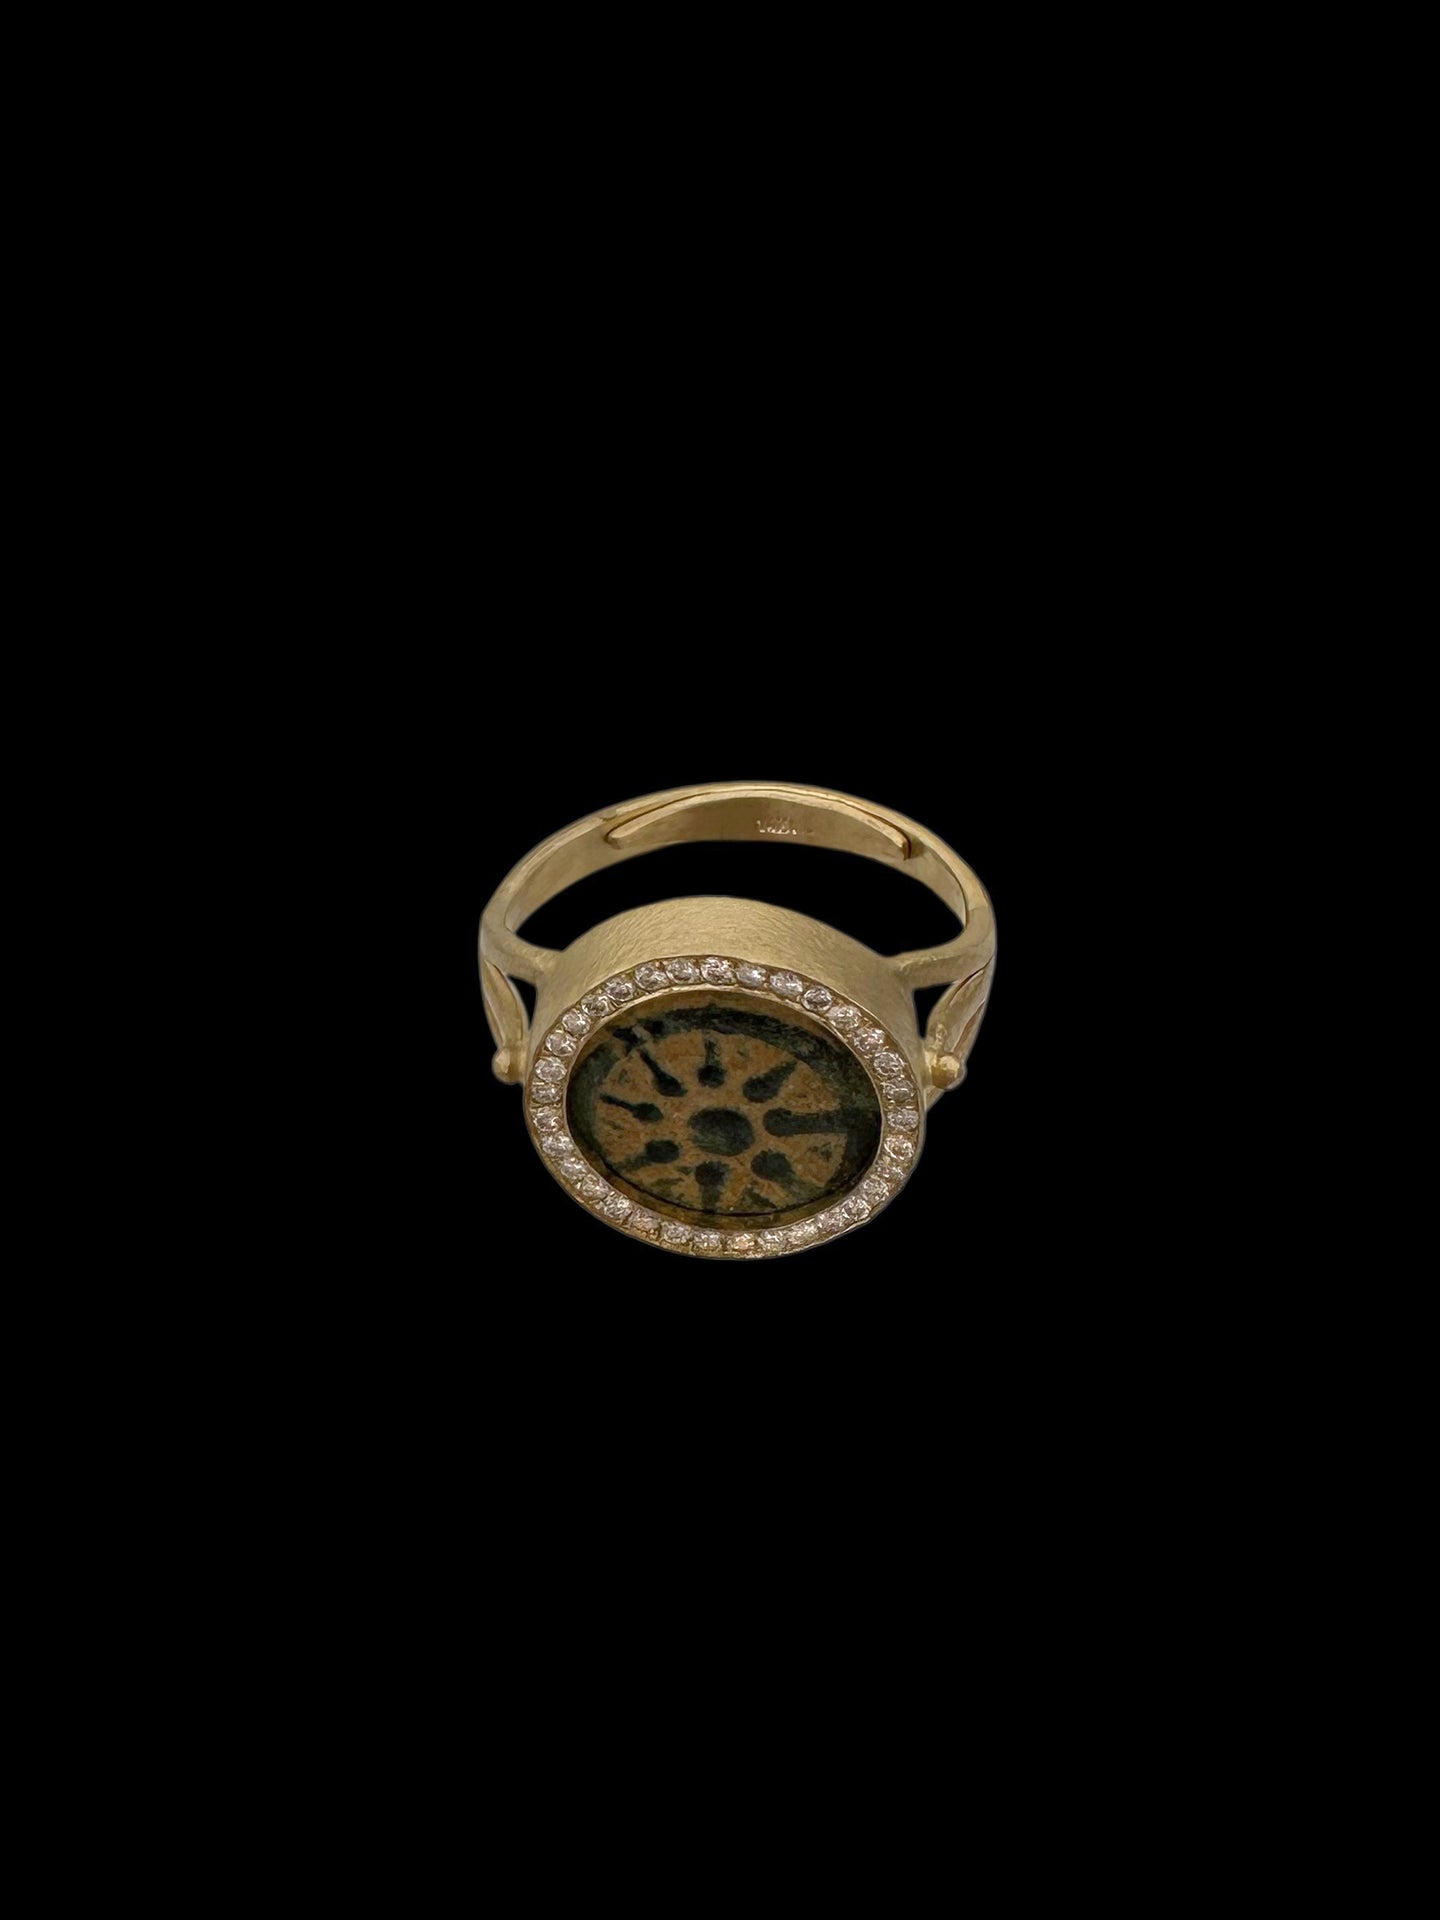 Ancient Widow’s Mite Jewish Maccabean Coin Set in 14k Gold & Natural Diamonds Ring